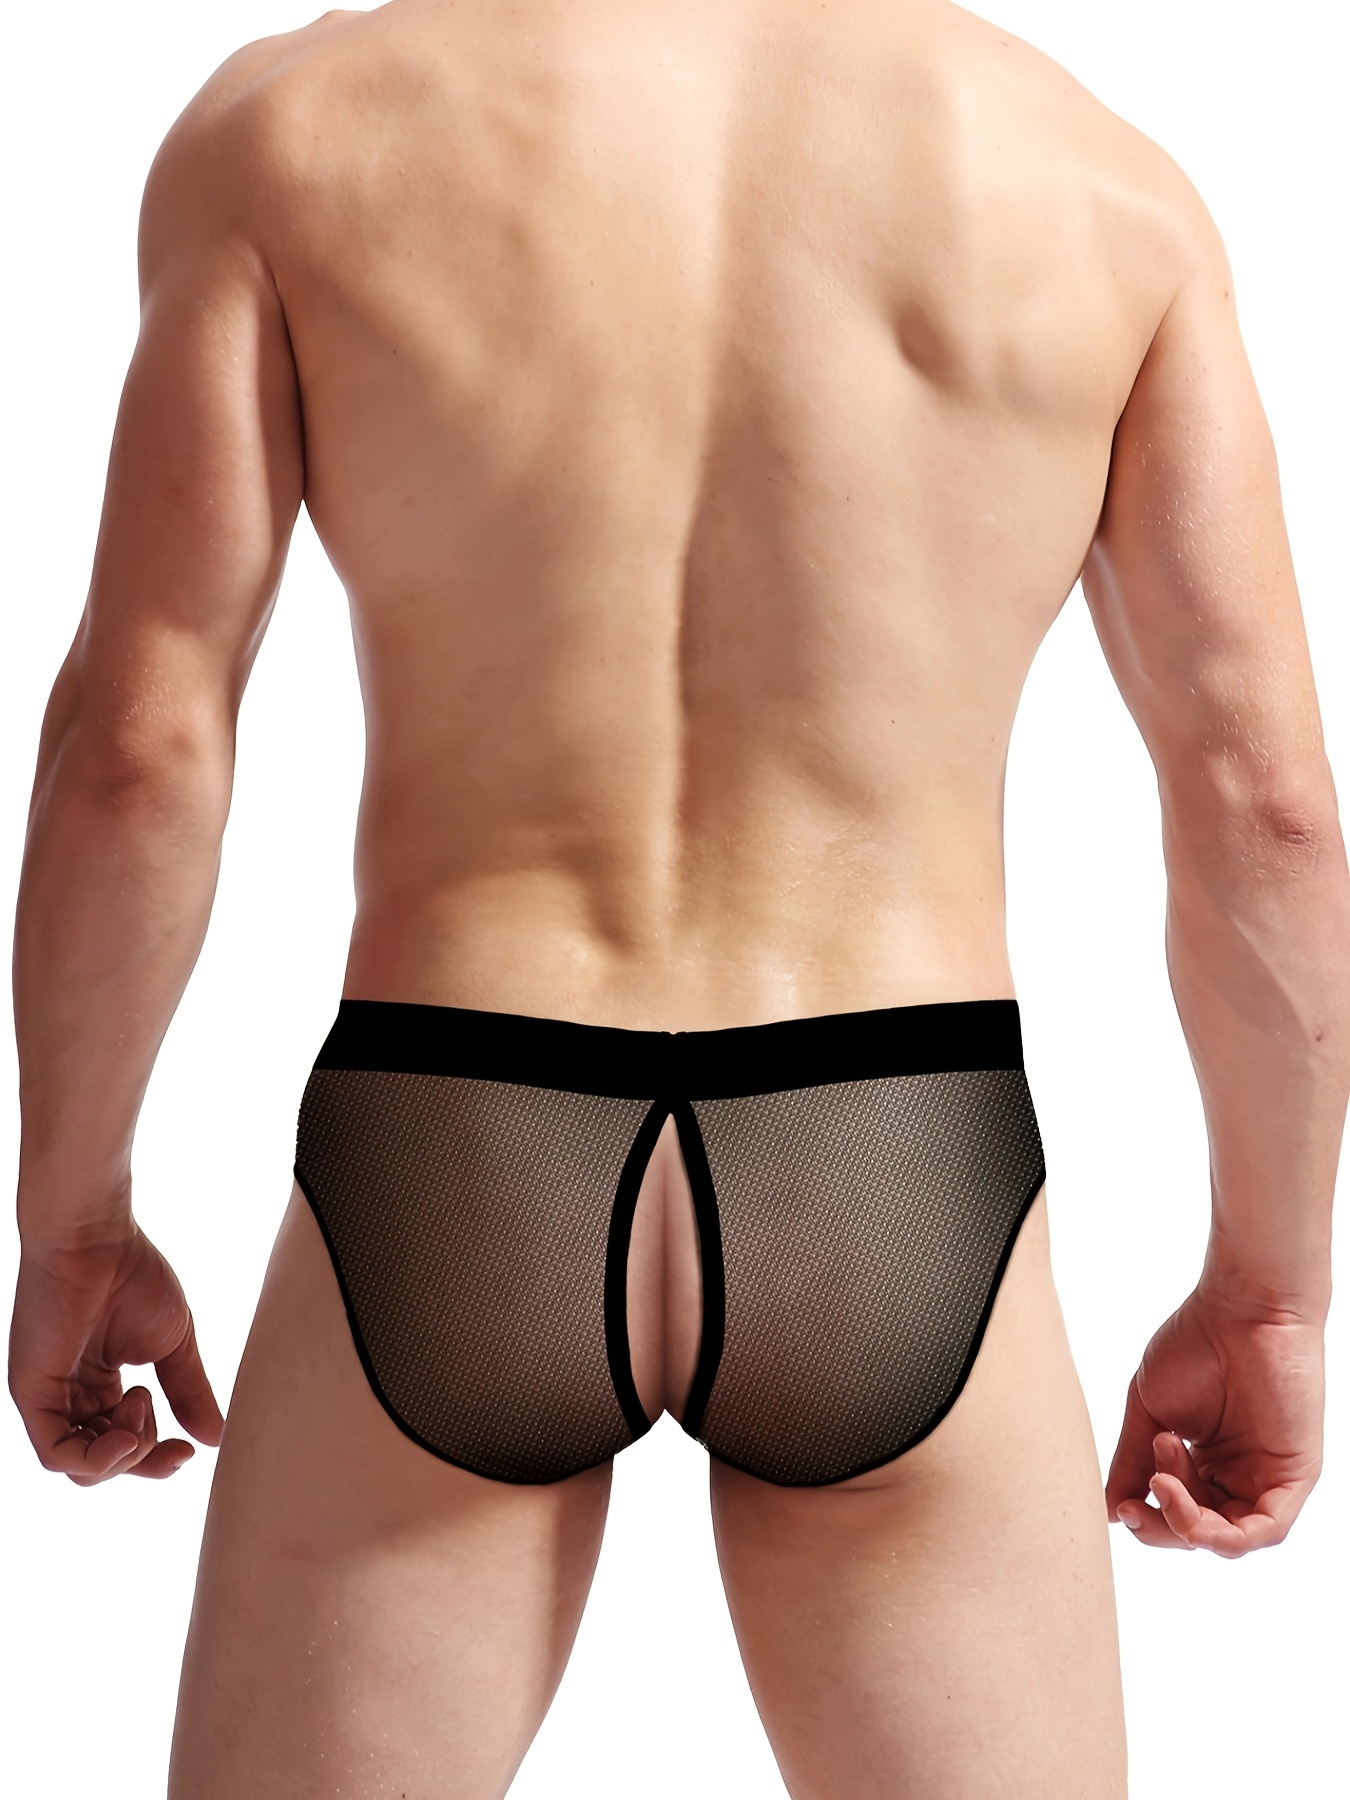 Sexy Transparent Thong Panties Women Lace See Through Crotch Mesh